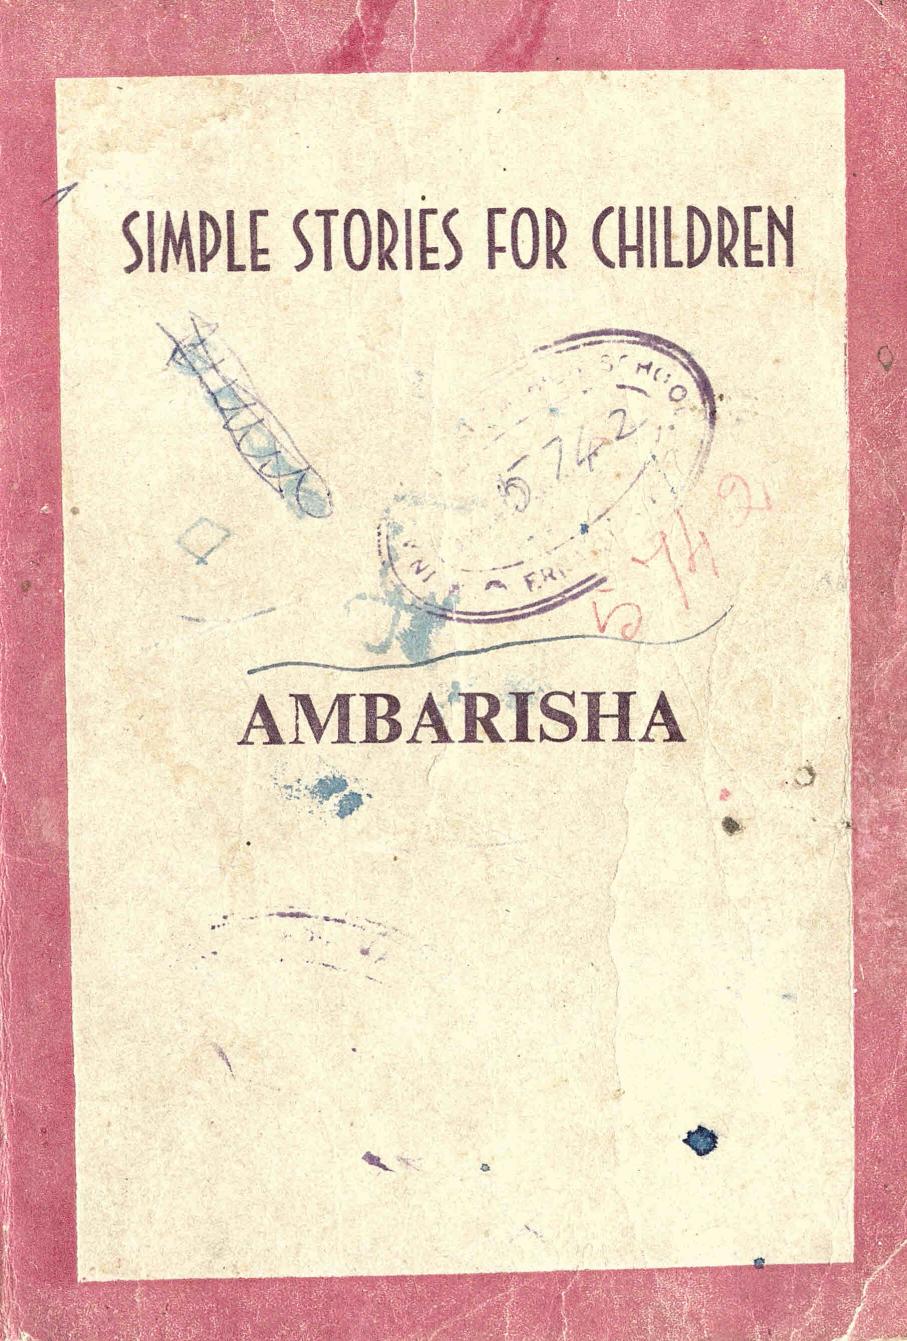  Simple Stories for Children - Book 1 - Ambarisha - Daksha